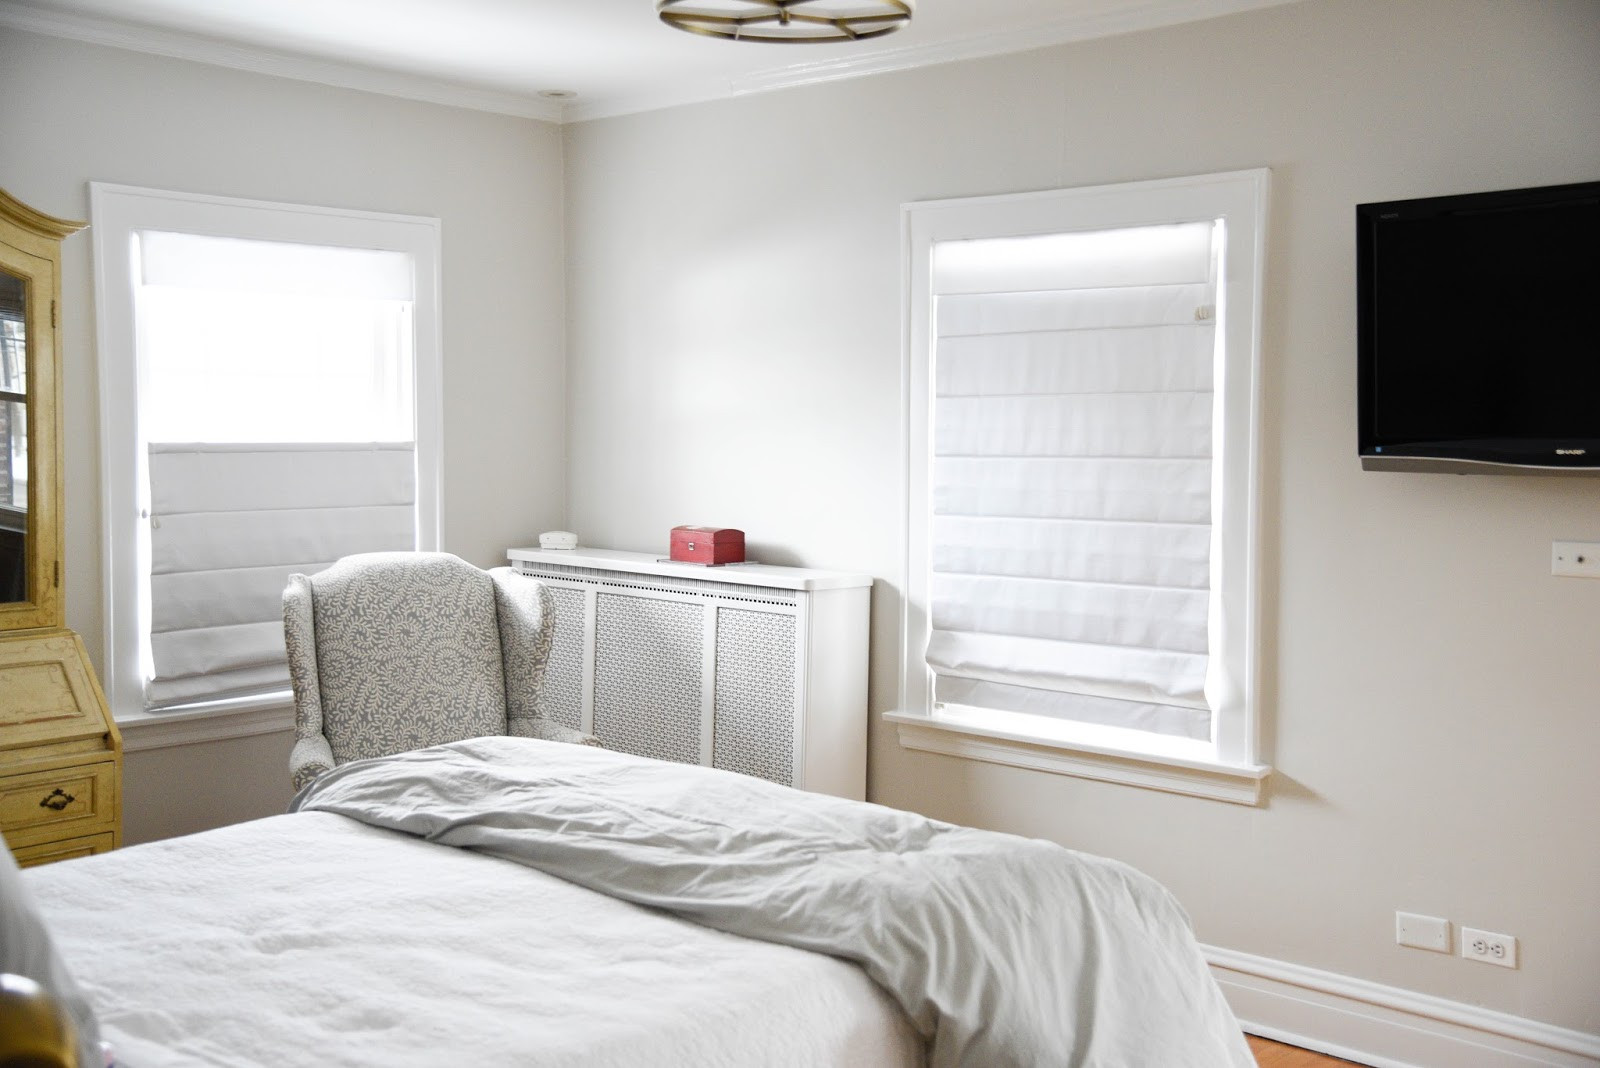 Master Bedroom Window Treatments
 Master Bedroom Window Treatments By Graber Home with Keki